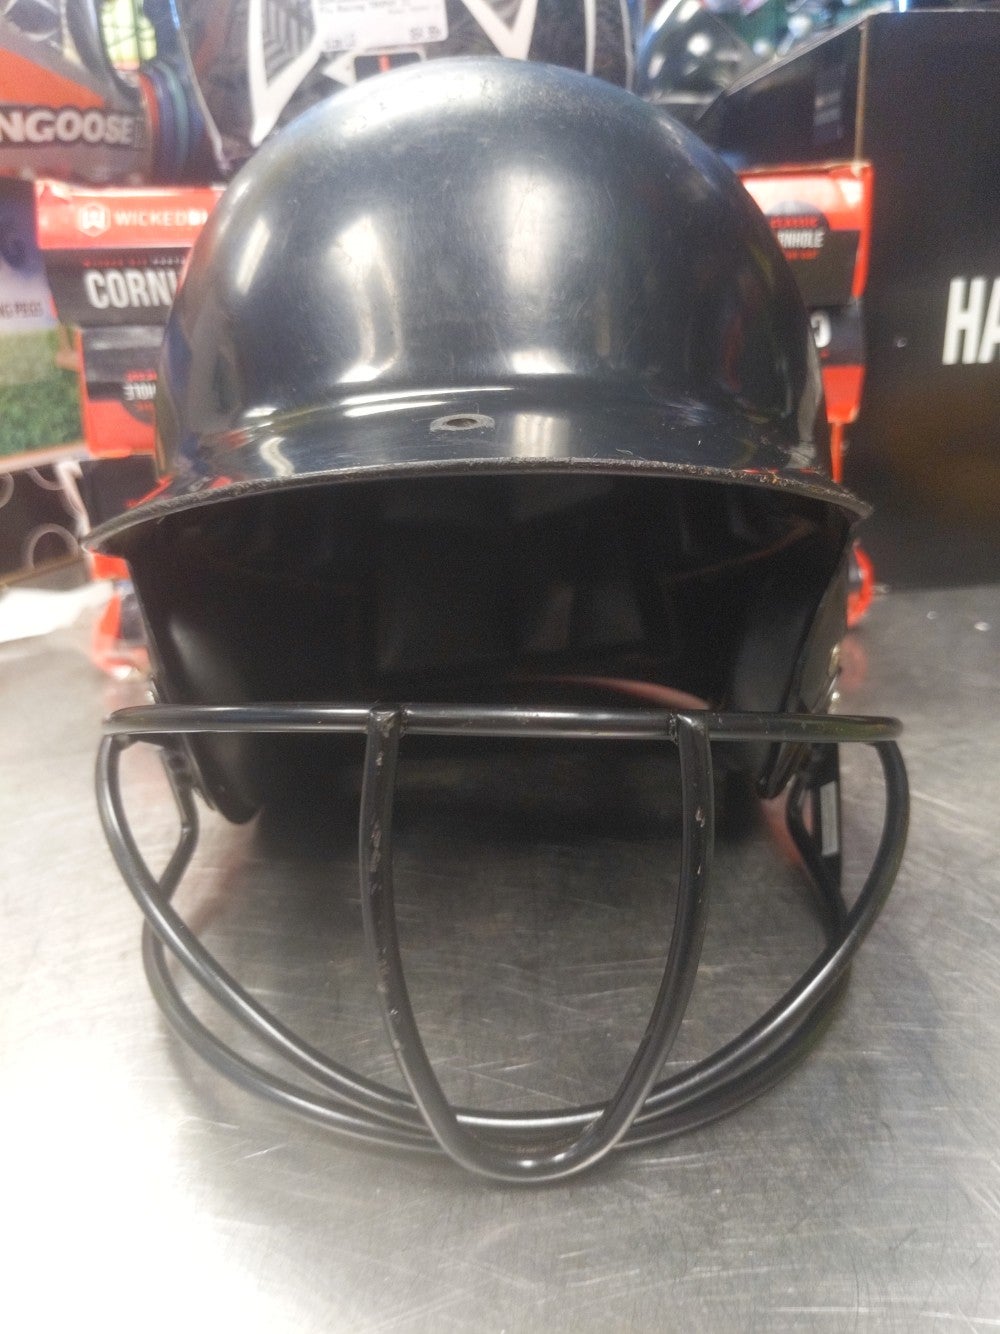 Schutt Men's Fitted XR2 Red Baseball Batter's Helmet XS